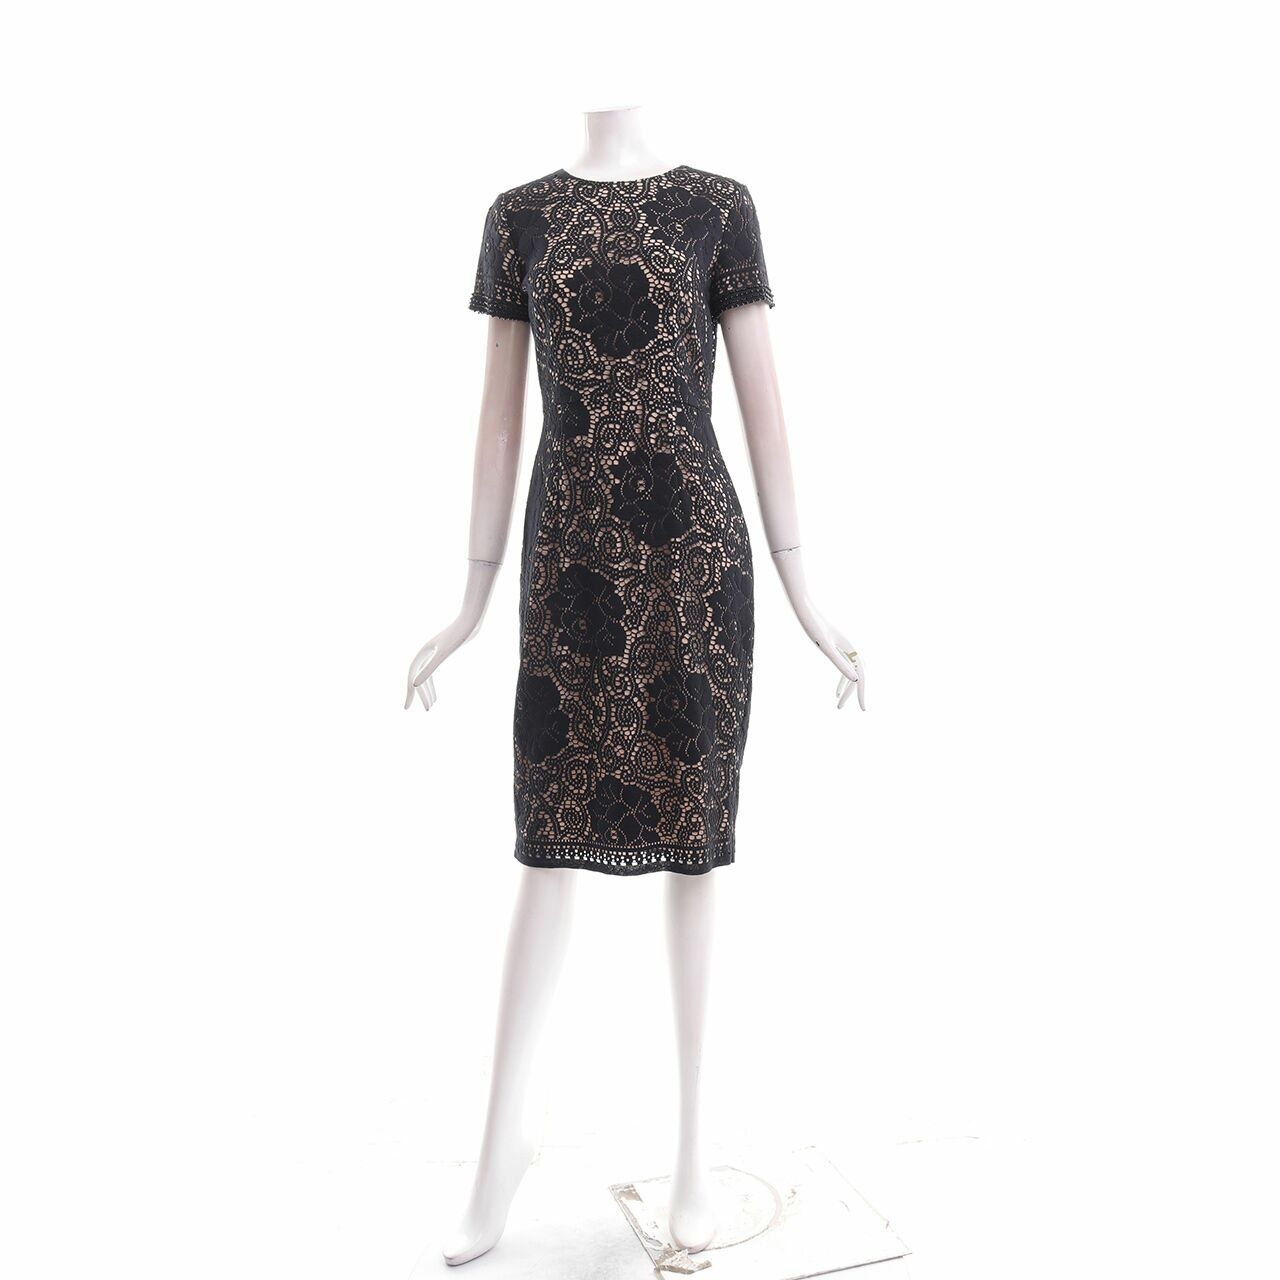 VOTUM By Sebastian & Cristina Black Parforated Midi Dress